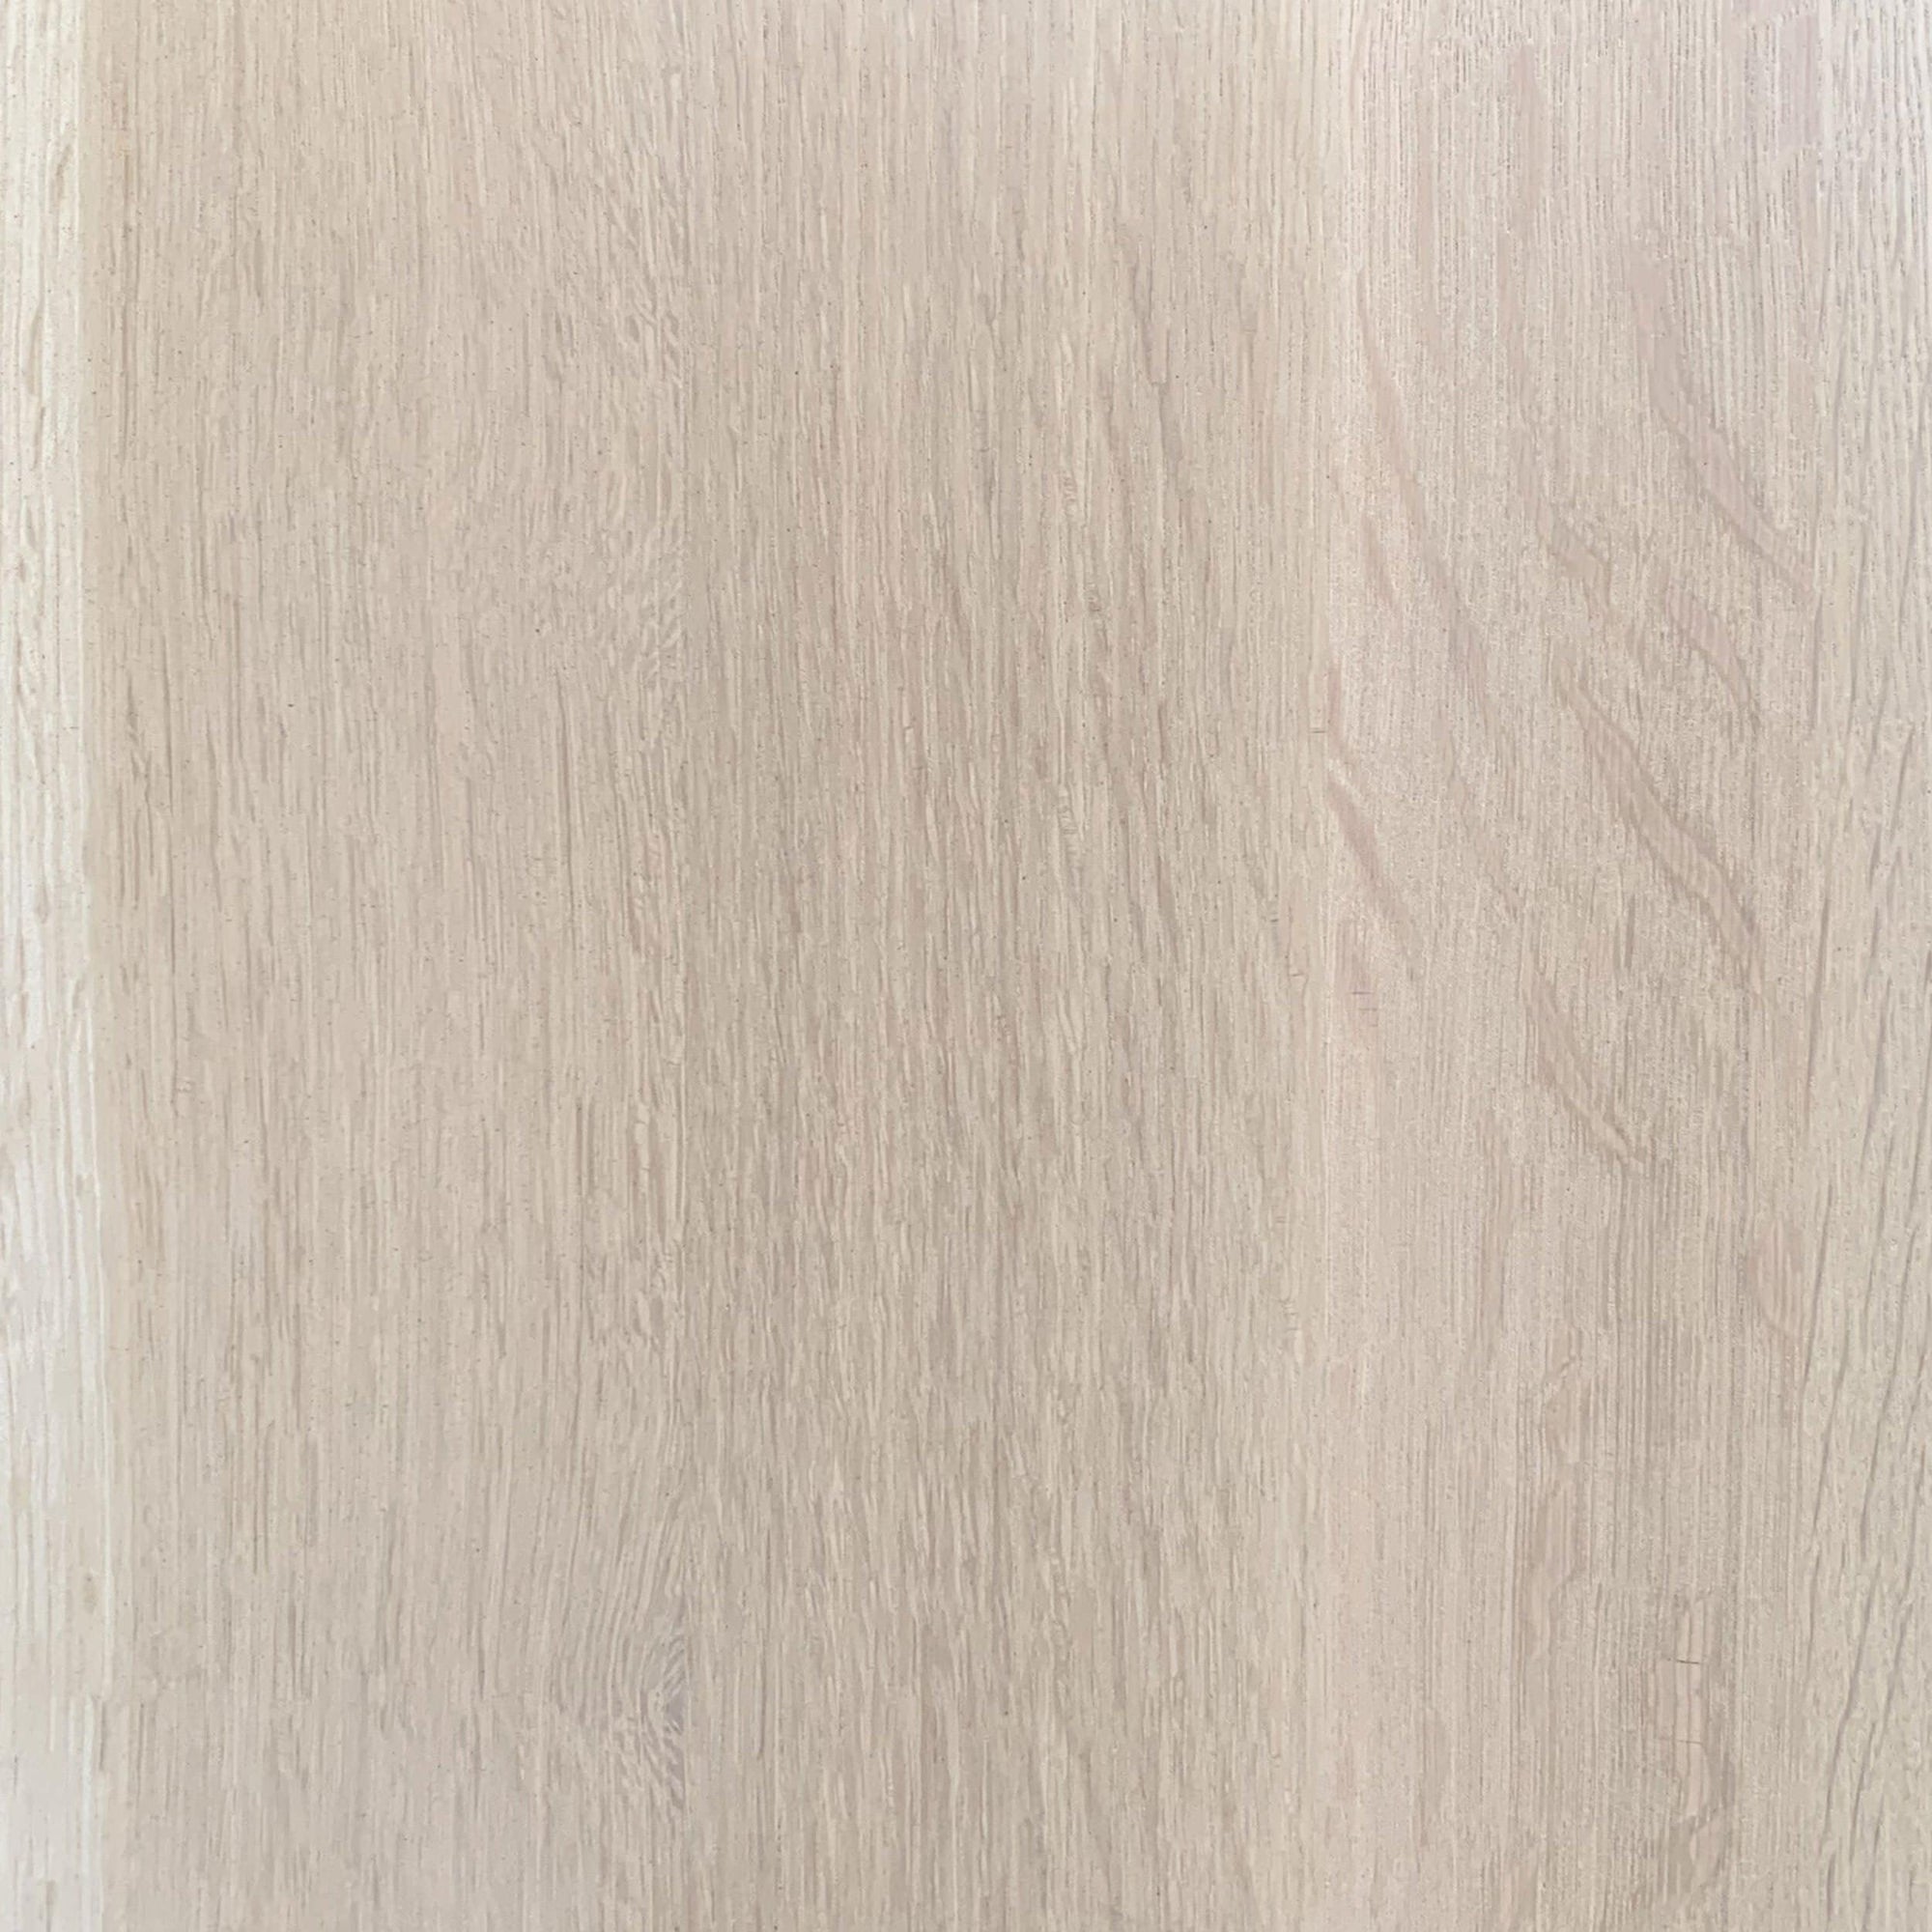 Driftwood Stained Quarter-Sawn White Oak - ROMI DESIGN